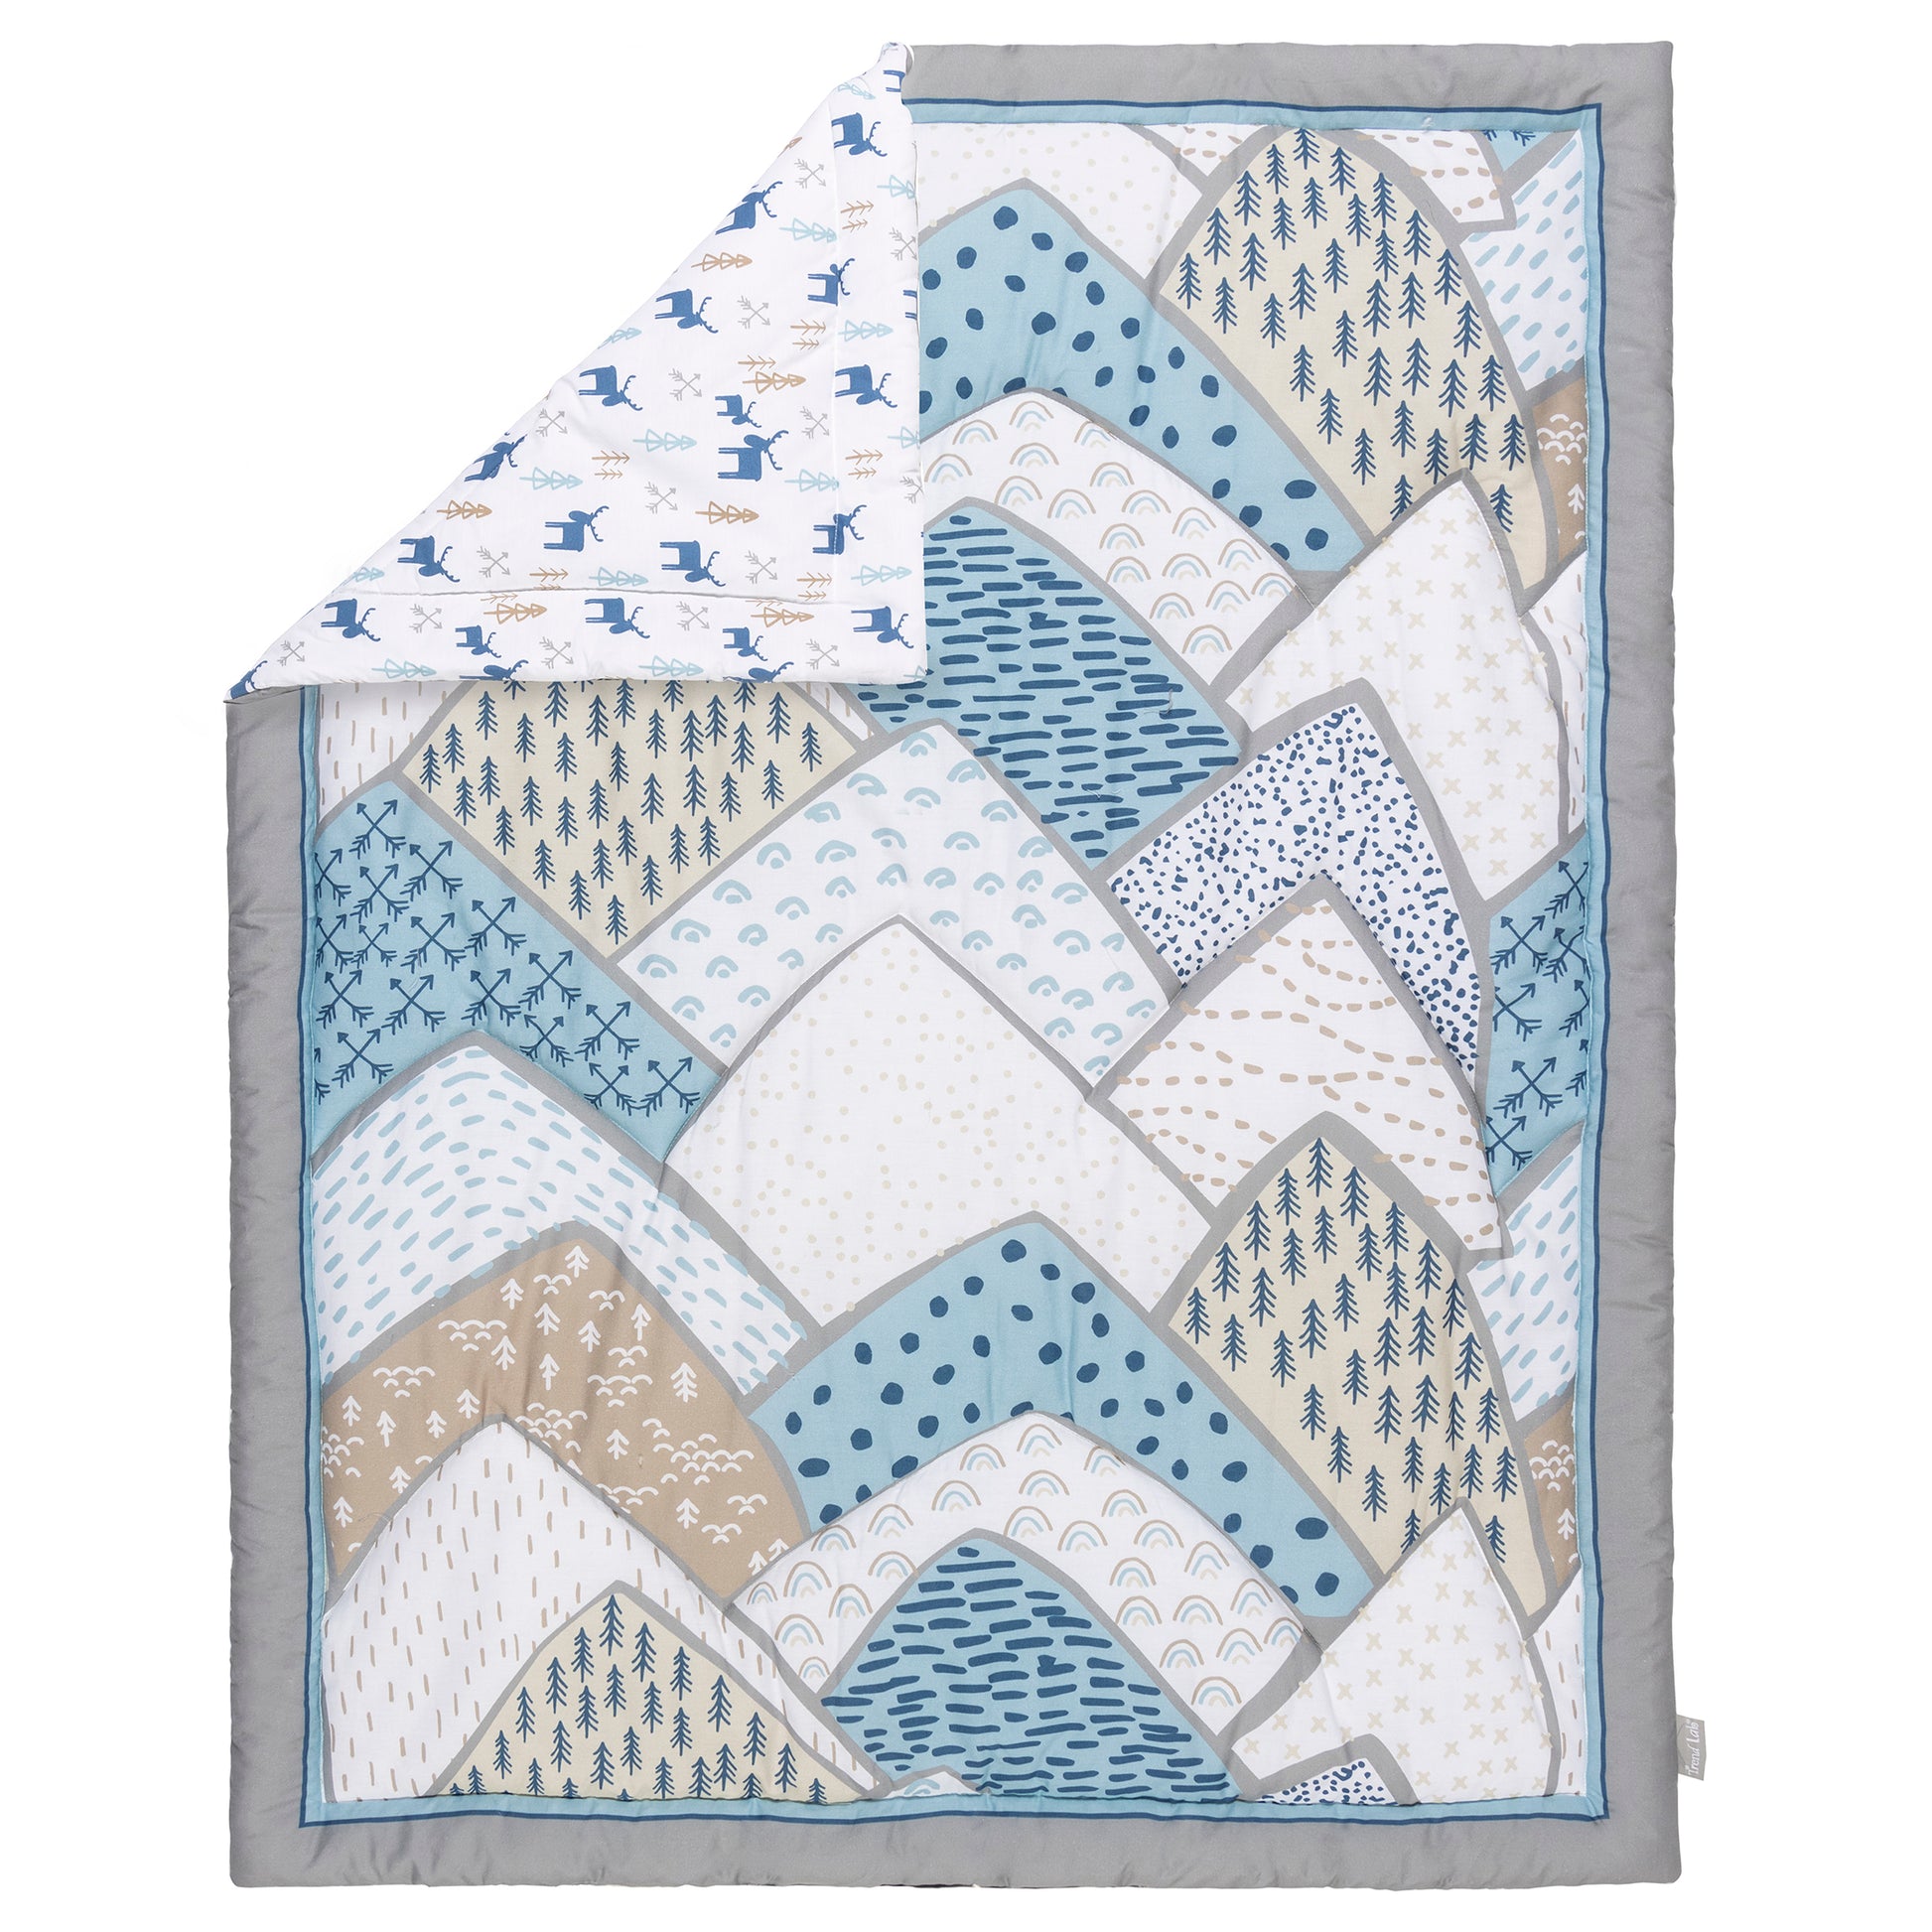 Big Sky 4 Piece Crib Bedding Set- folded corner showcasing reverse side quilt pattern